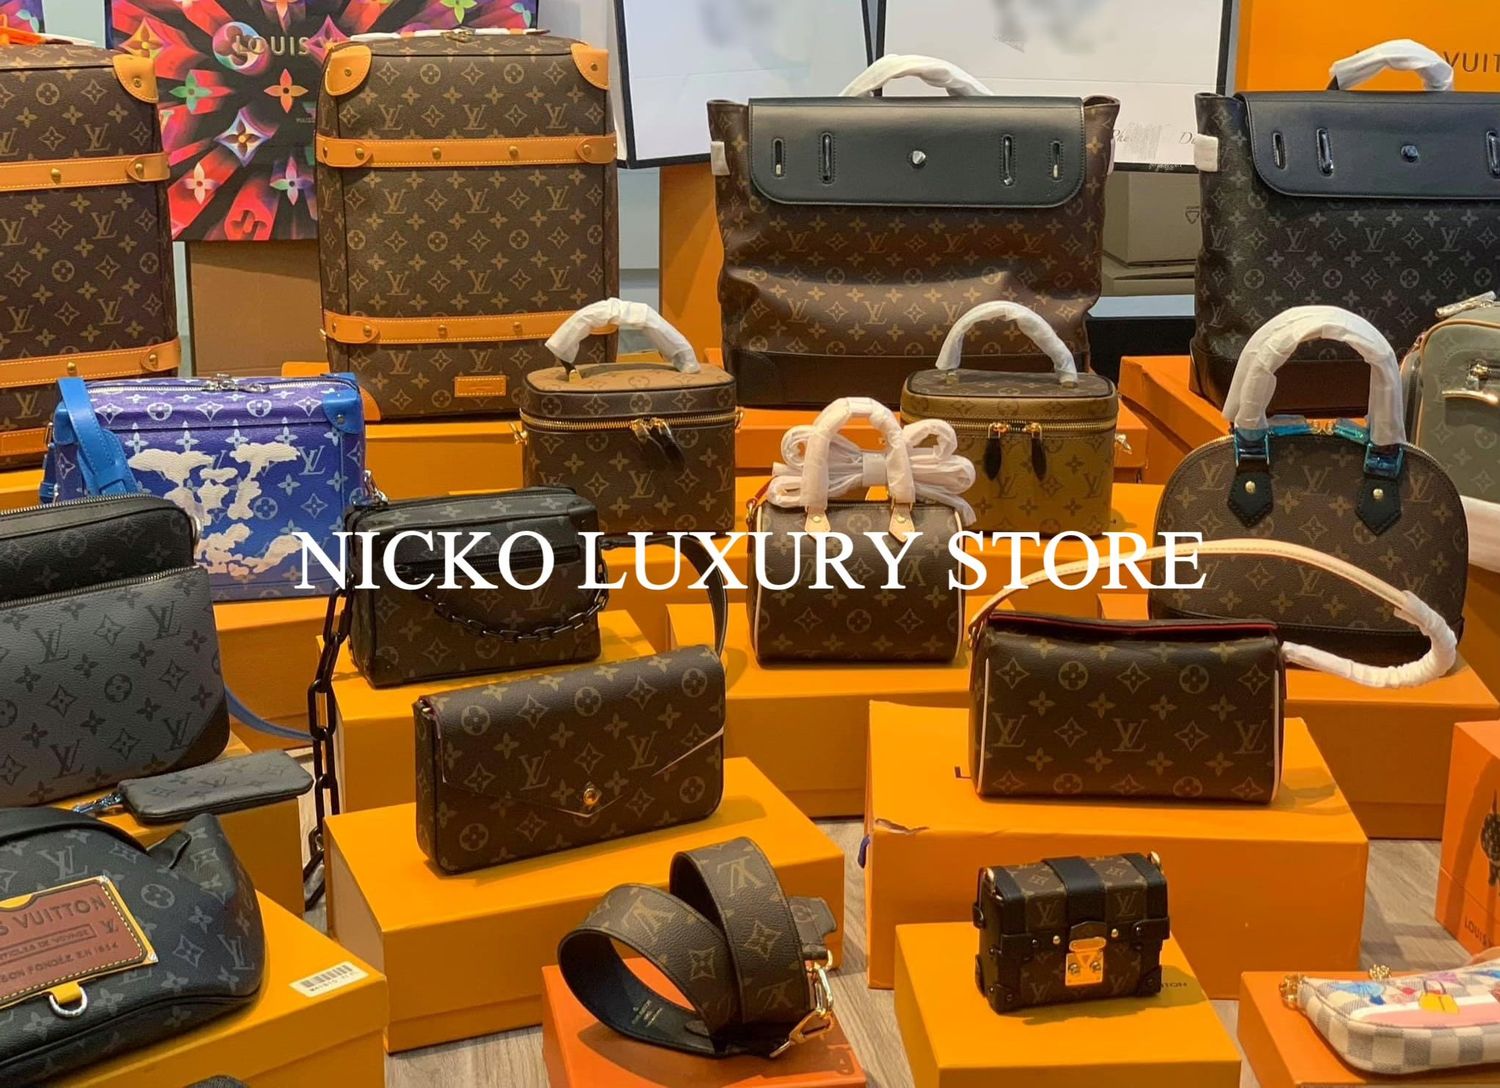 Nicko Luxury Store